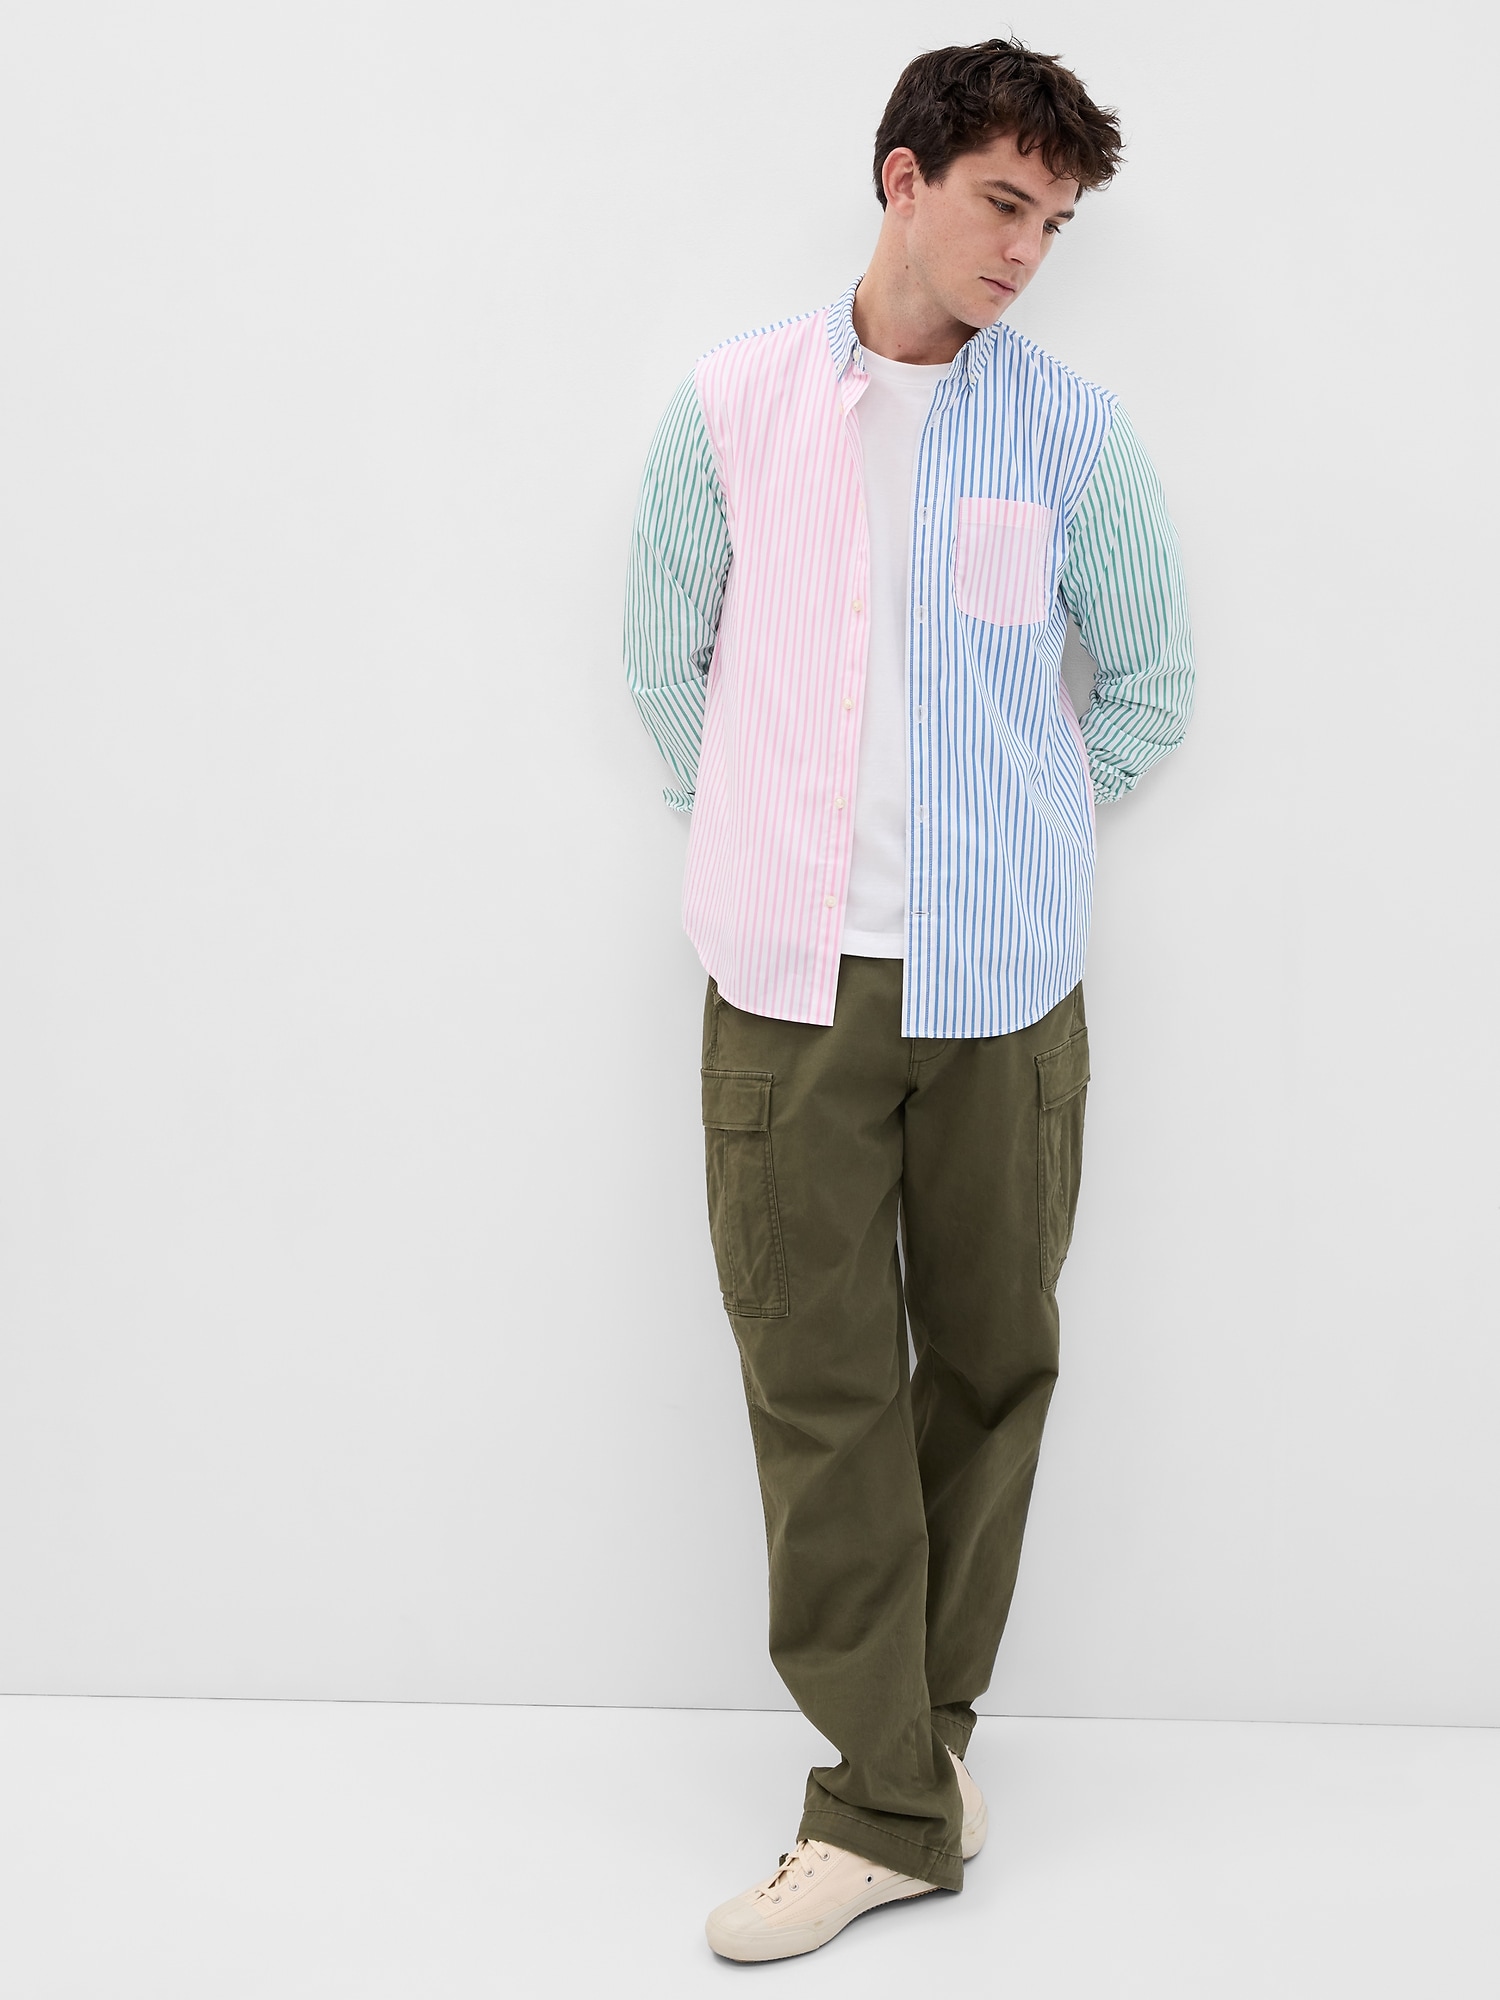 Gap All-day Poplin Shirt In Standard Fit In Soft Multi Stripe